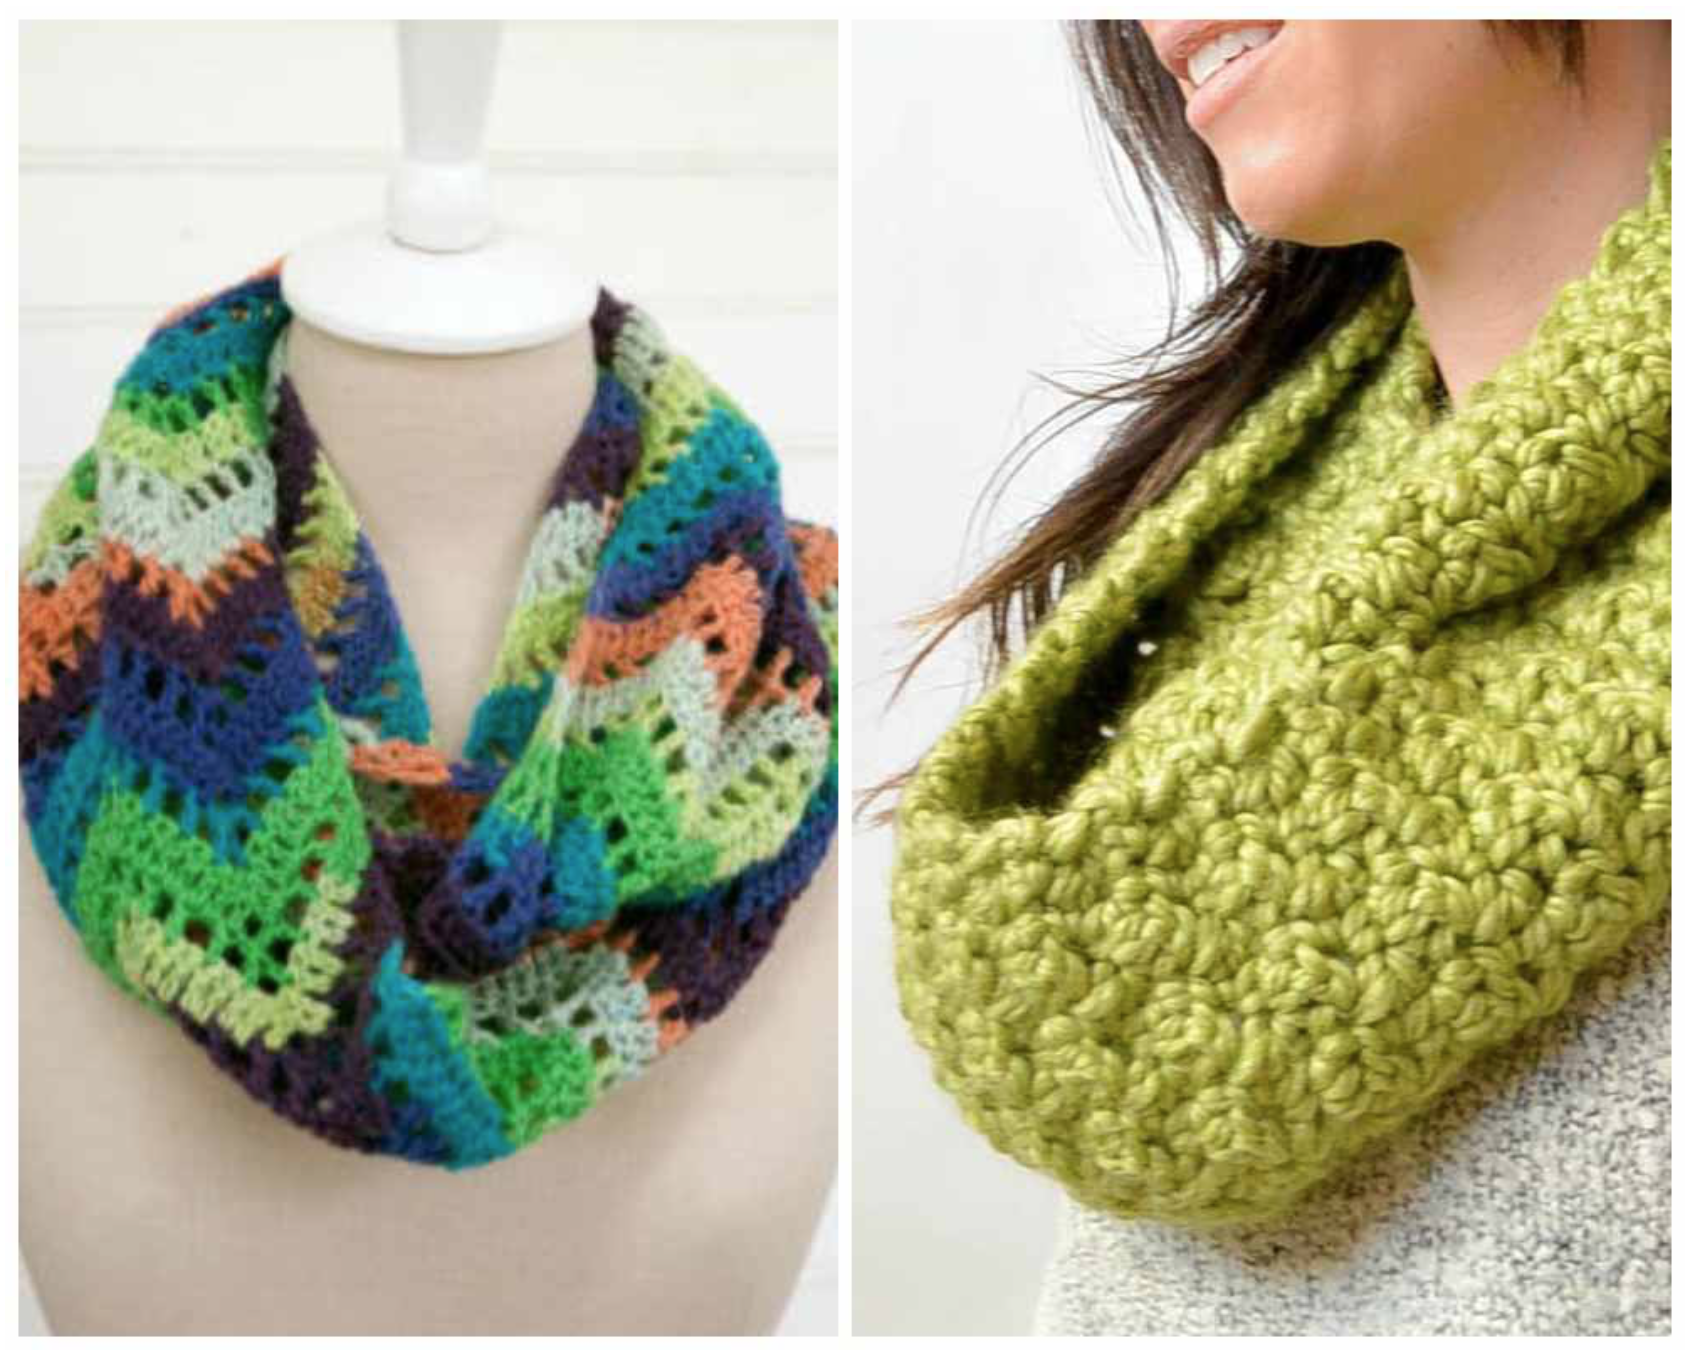 Hooded Infinity Scarf with Faux Fur yarn - free crochet pattern